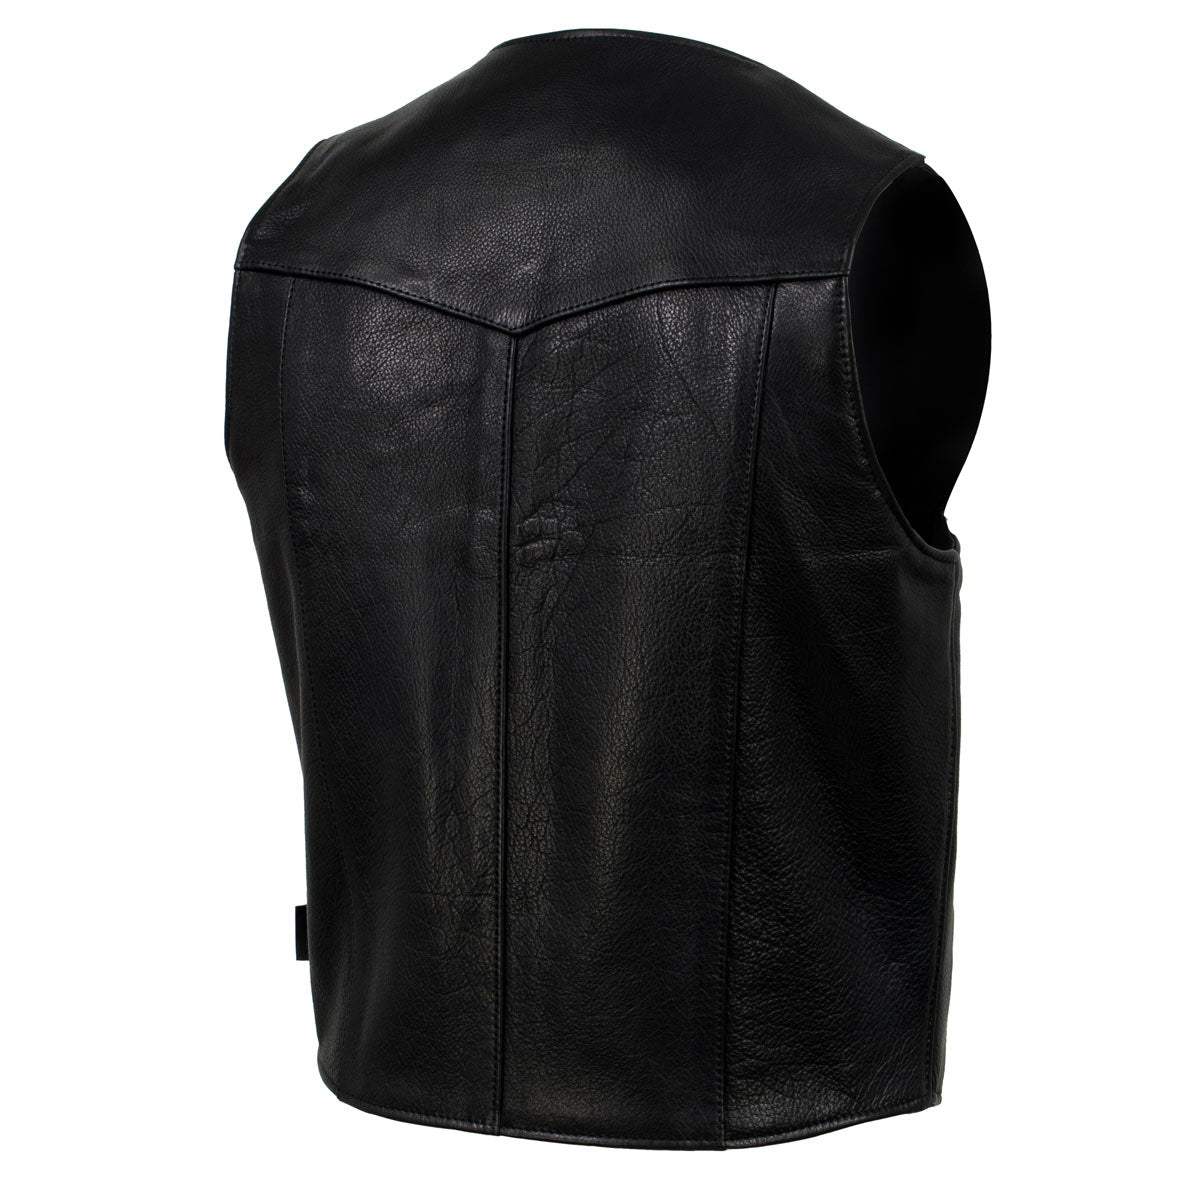 Milwaukee Leather USA MADE MLVSM5006 Men's Black 'Classic Western' Premium Motorcycle Leather Vest